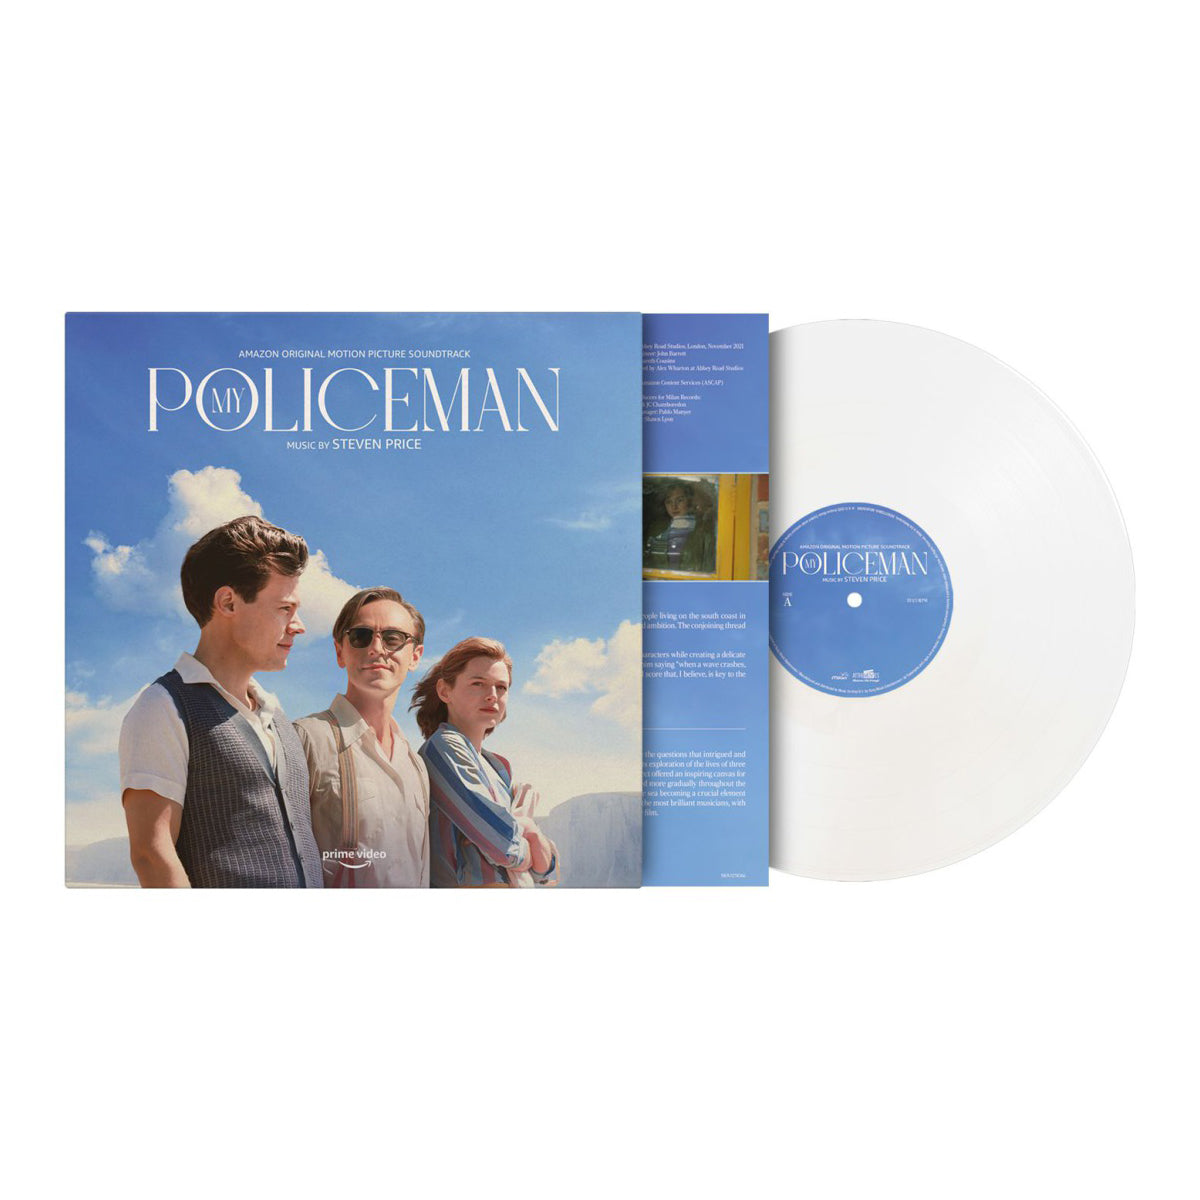 My Policeman: Limited Edition Crystal Clear Vinyl LP